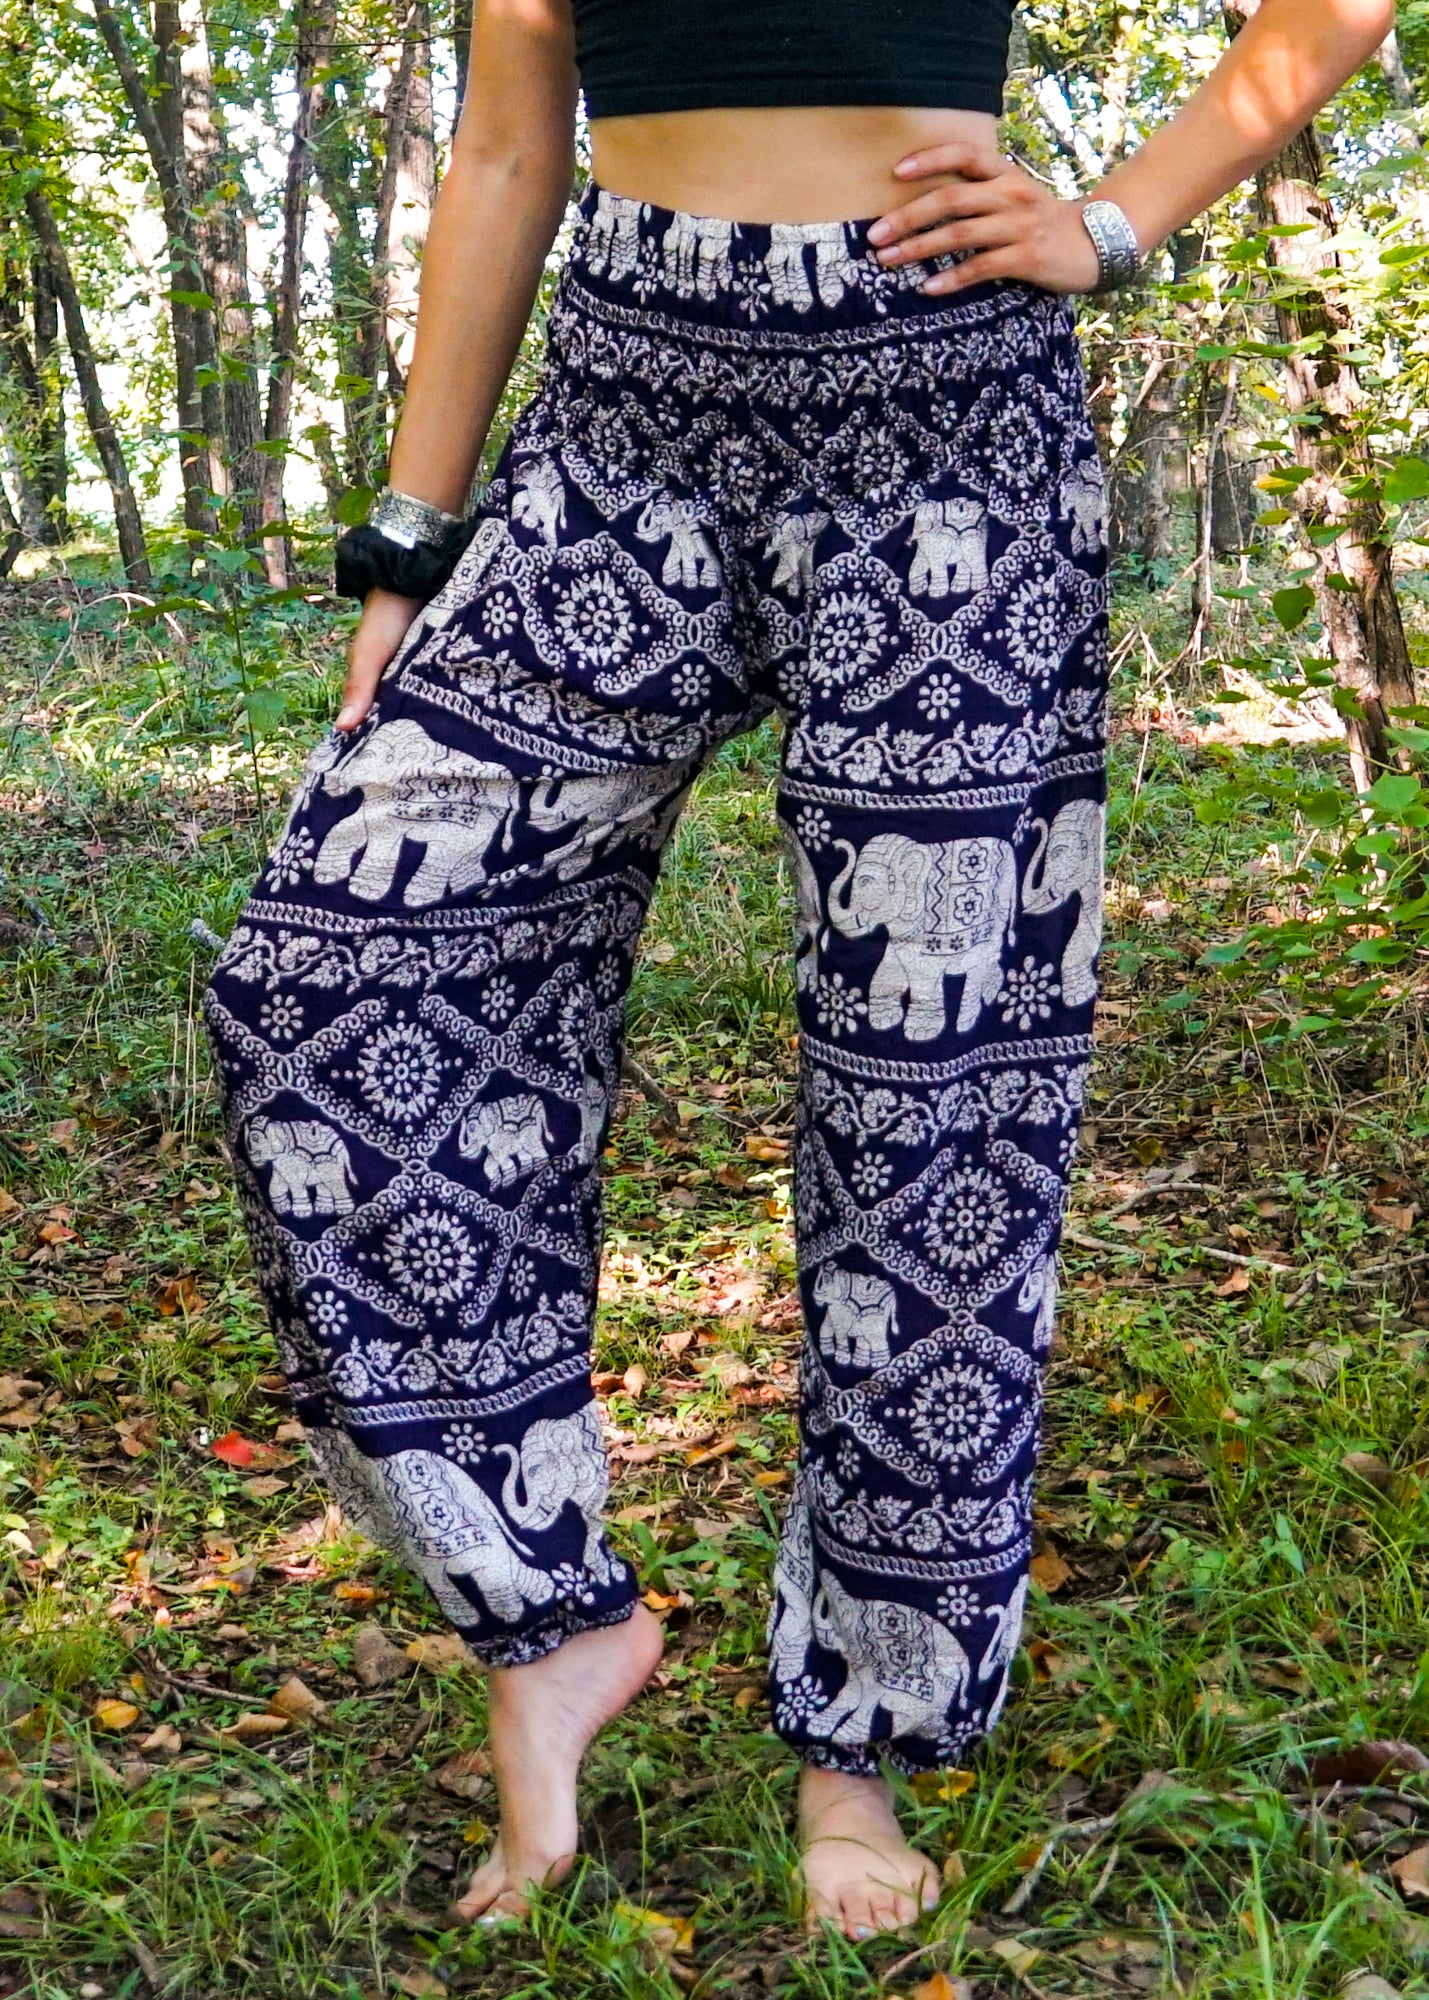 TEAL ELEPHANT PANTS Hippie Boho Yoga Harem Pants Festival Wear Thailand  Pants Drawstring Waist Plus Size Pants Bohemian Style - Etsy